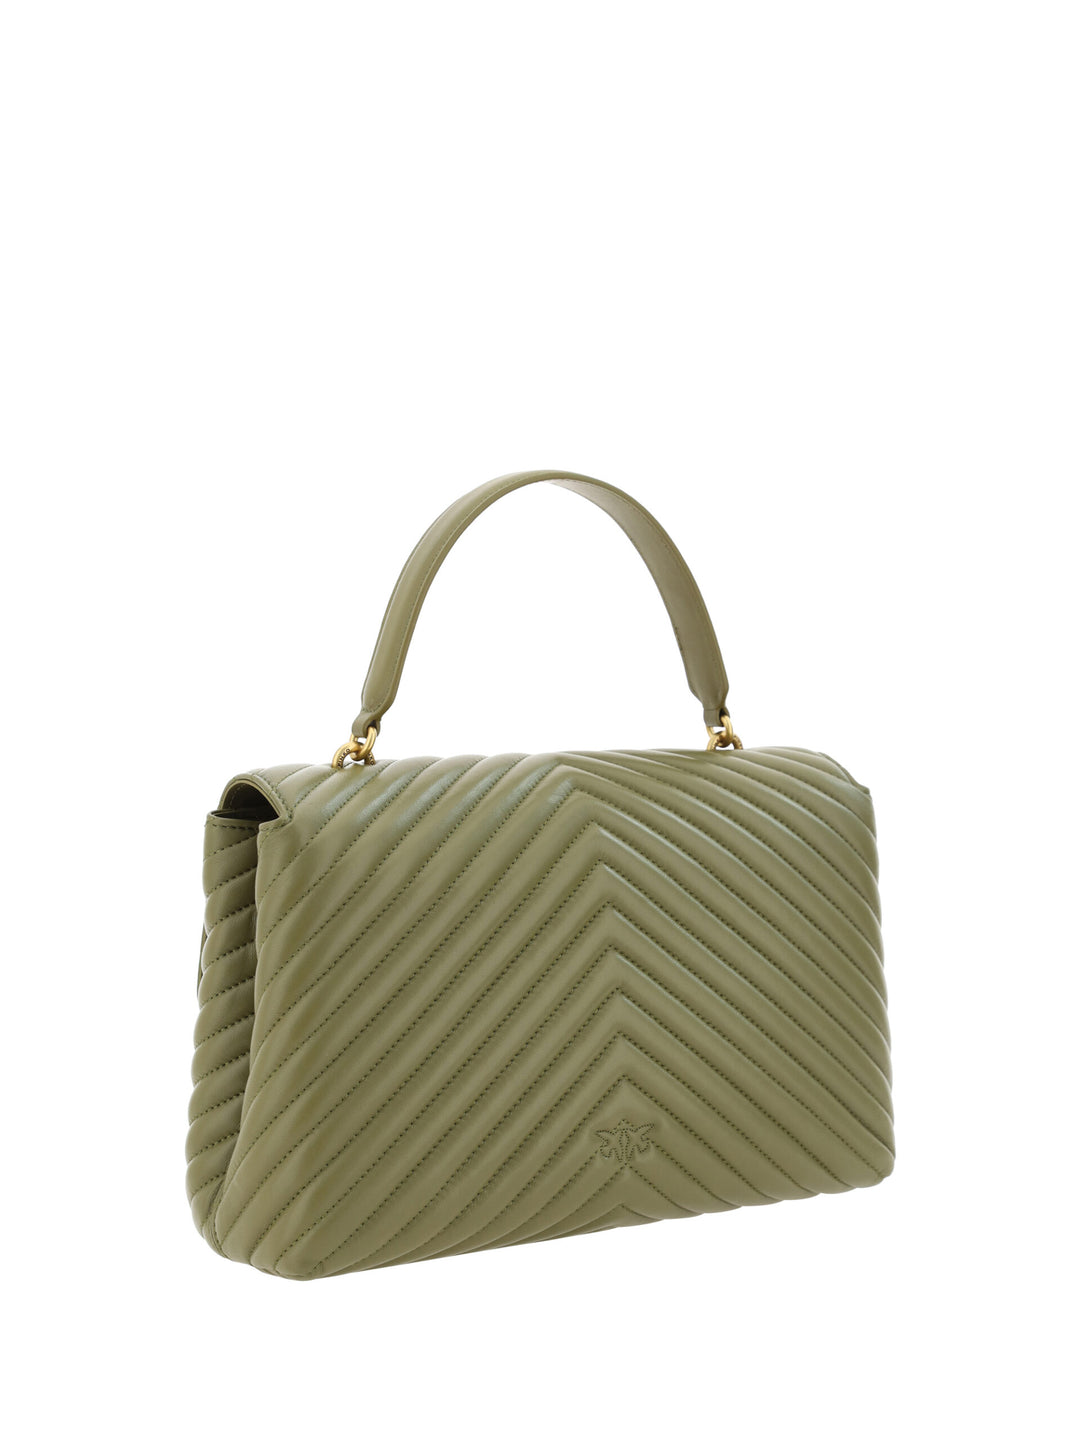 PINKO Green Calf Leather Love Lady Handbag